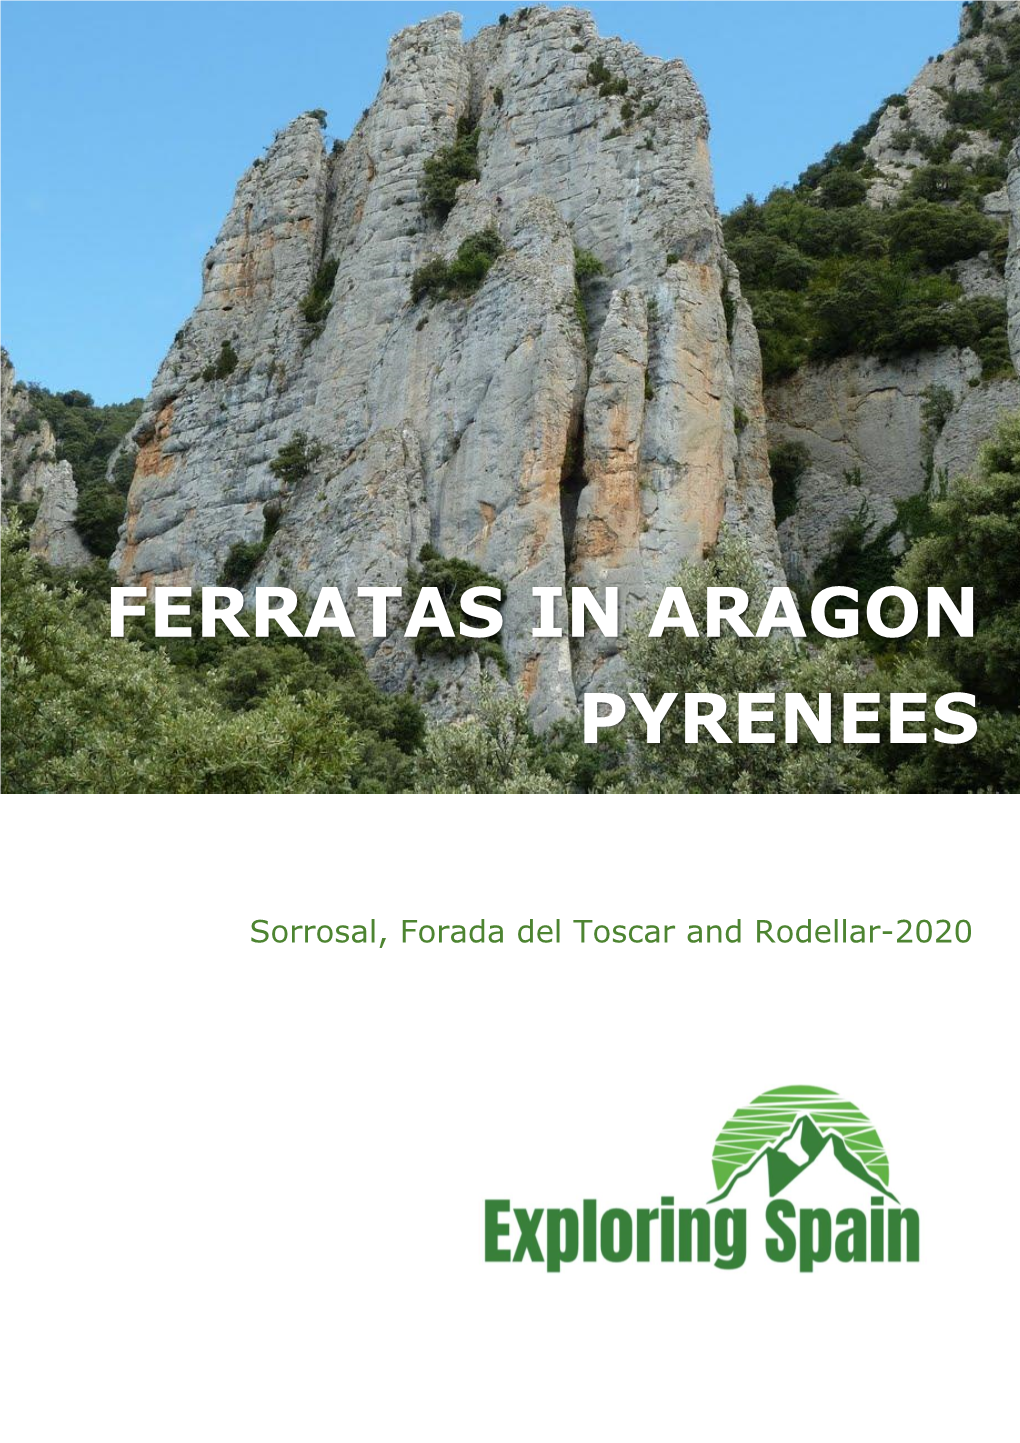 Ferratas in Aragon Pyrenees